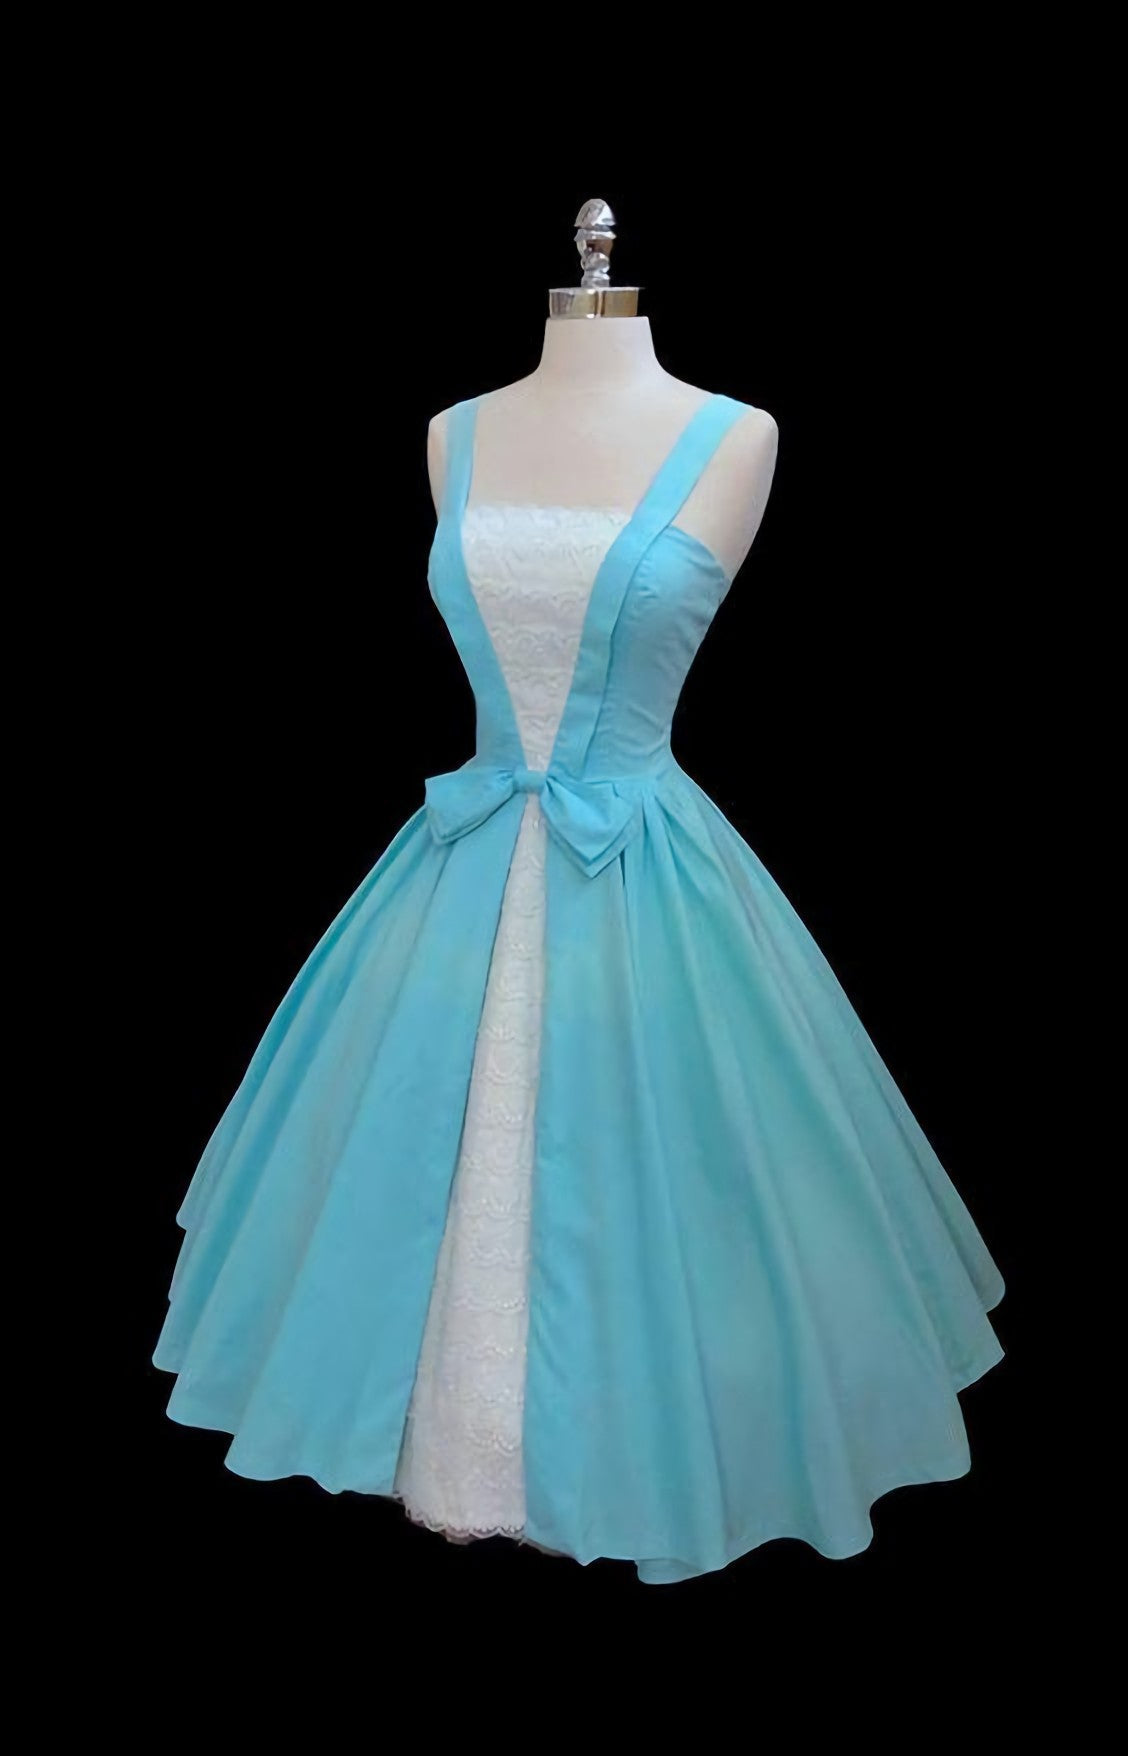 Corset Homecoming Dress, New Vintage Corset Ball Gown Corset Homecoming Dresses outfit, Prom Dress Website